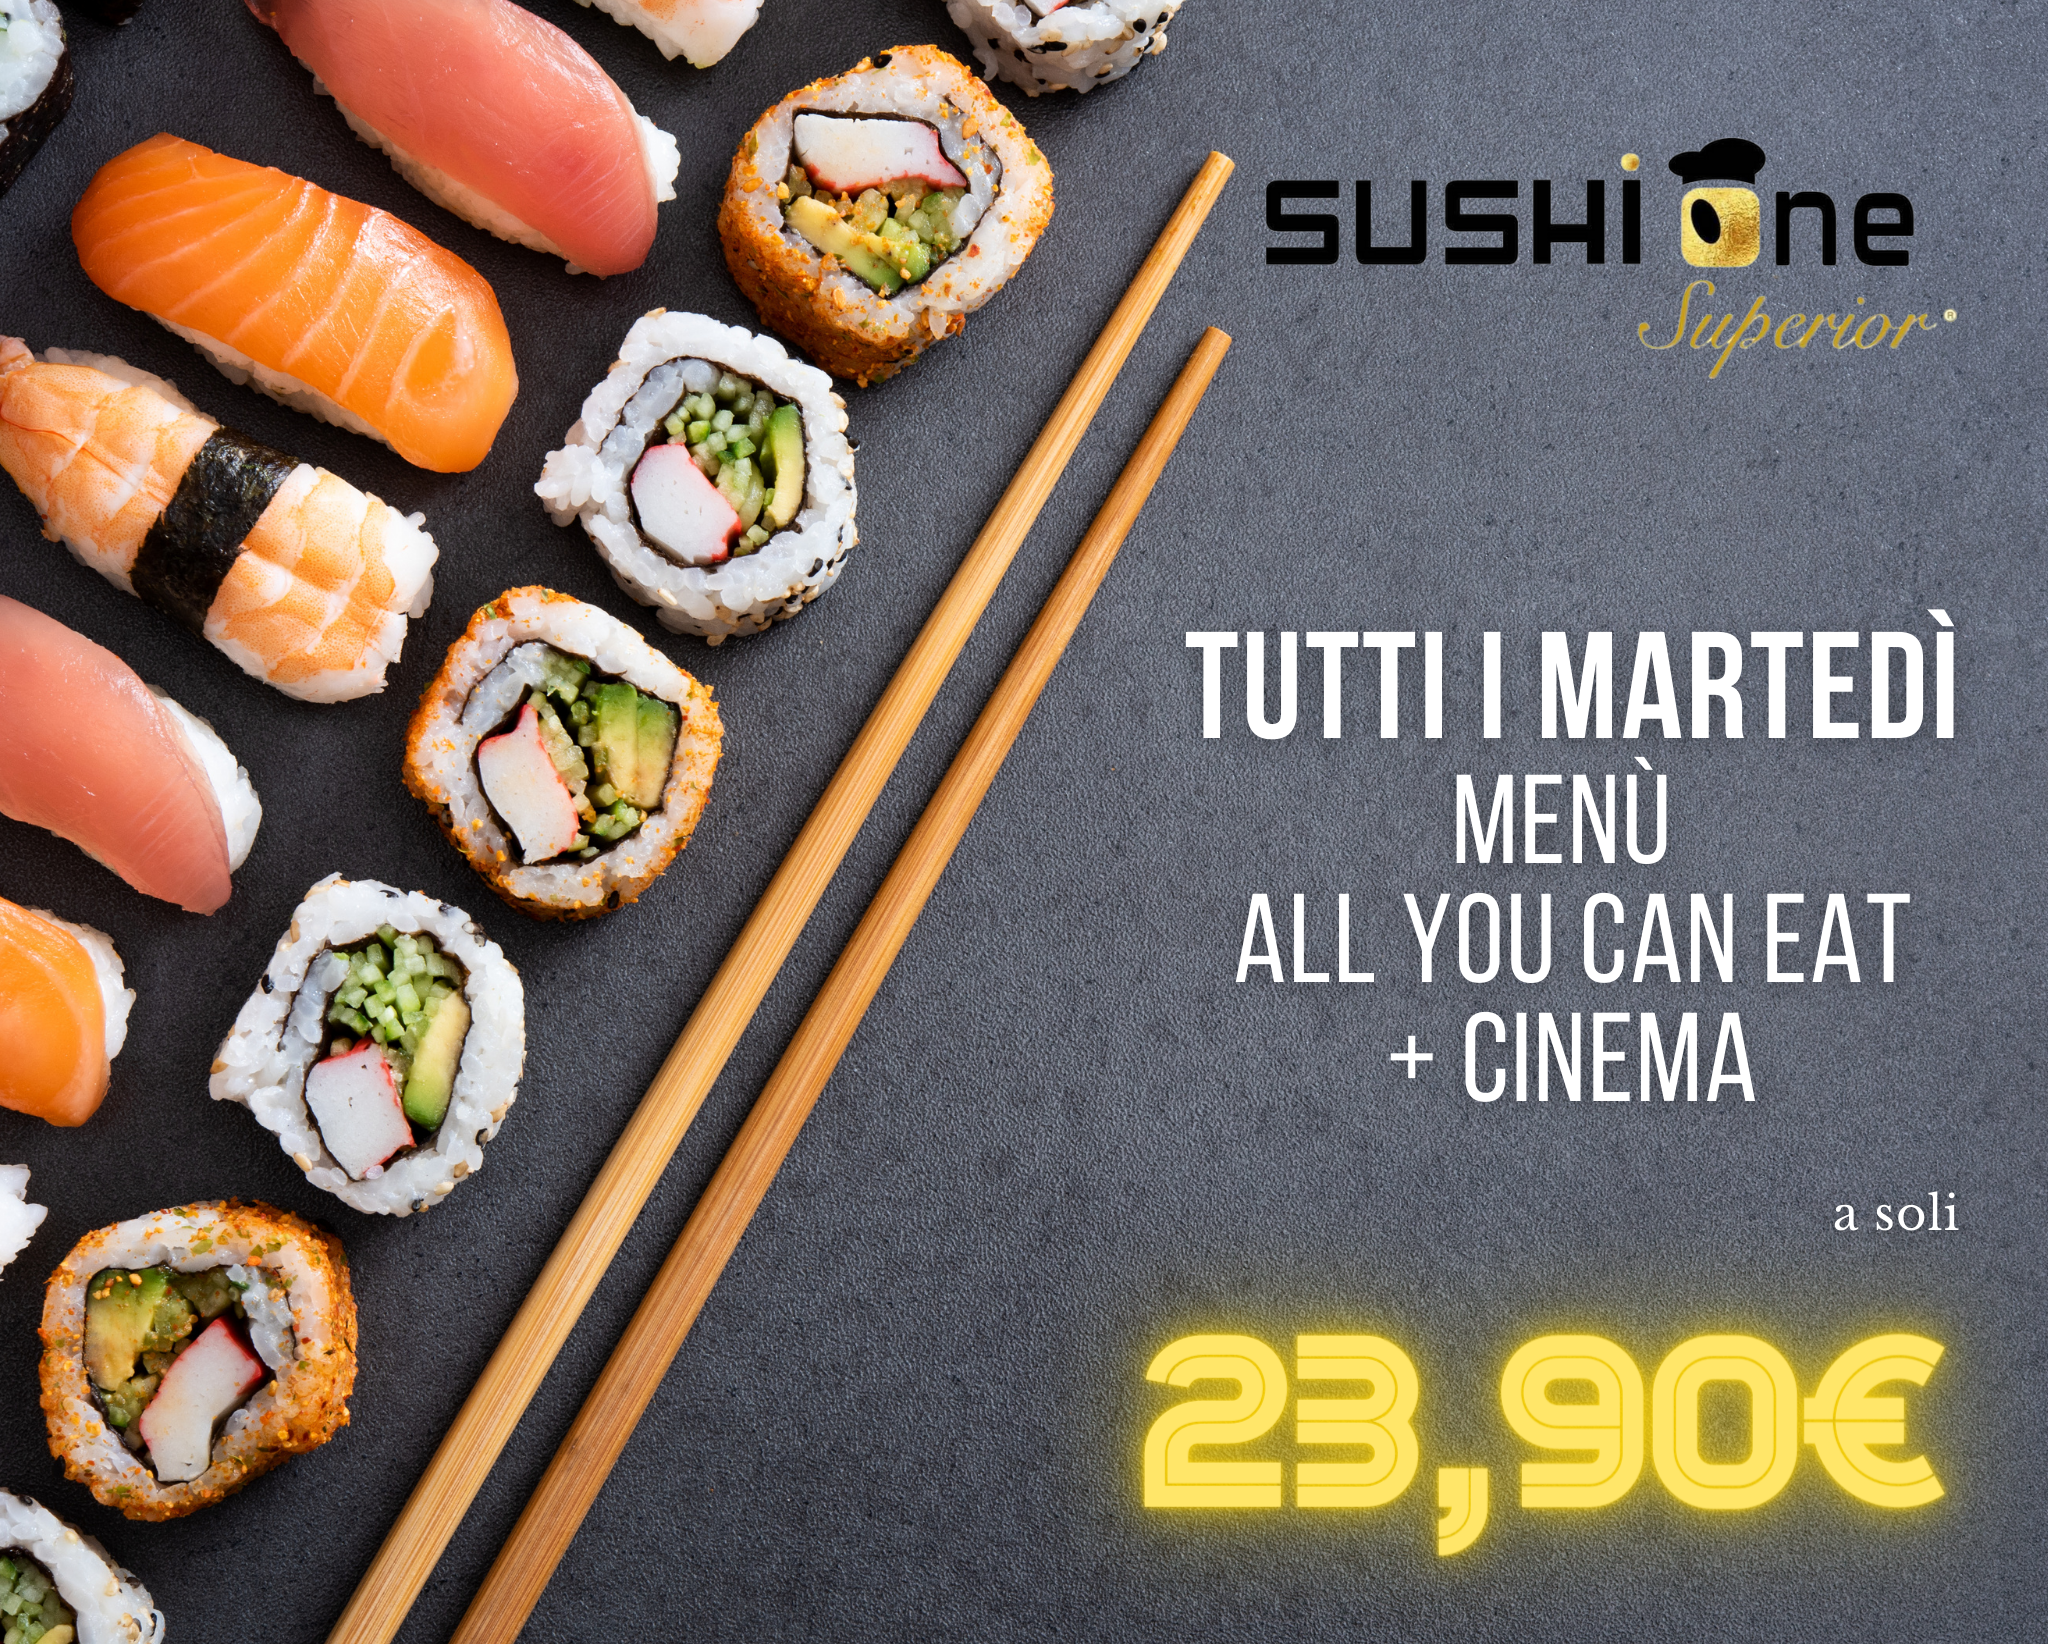 Sushi One - Tutti i martedì menù infinity + cinema a 20 €